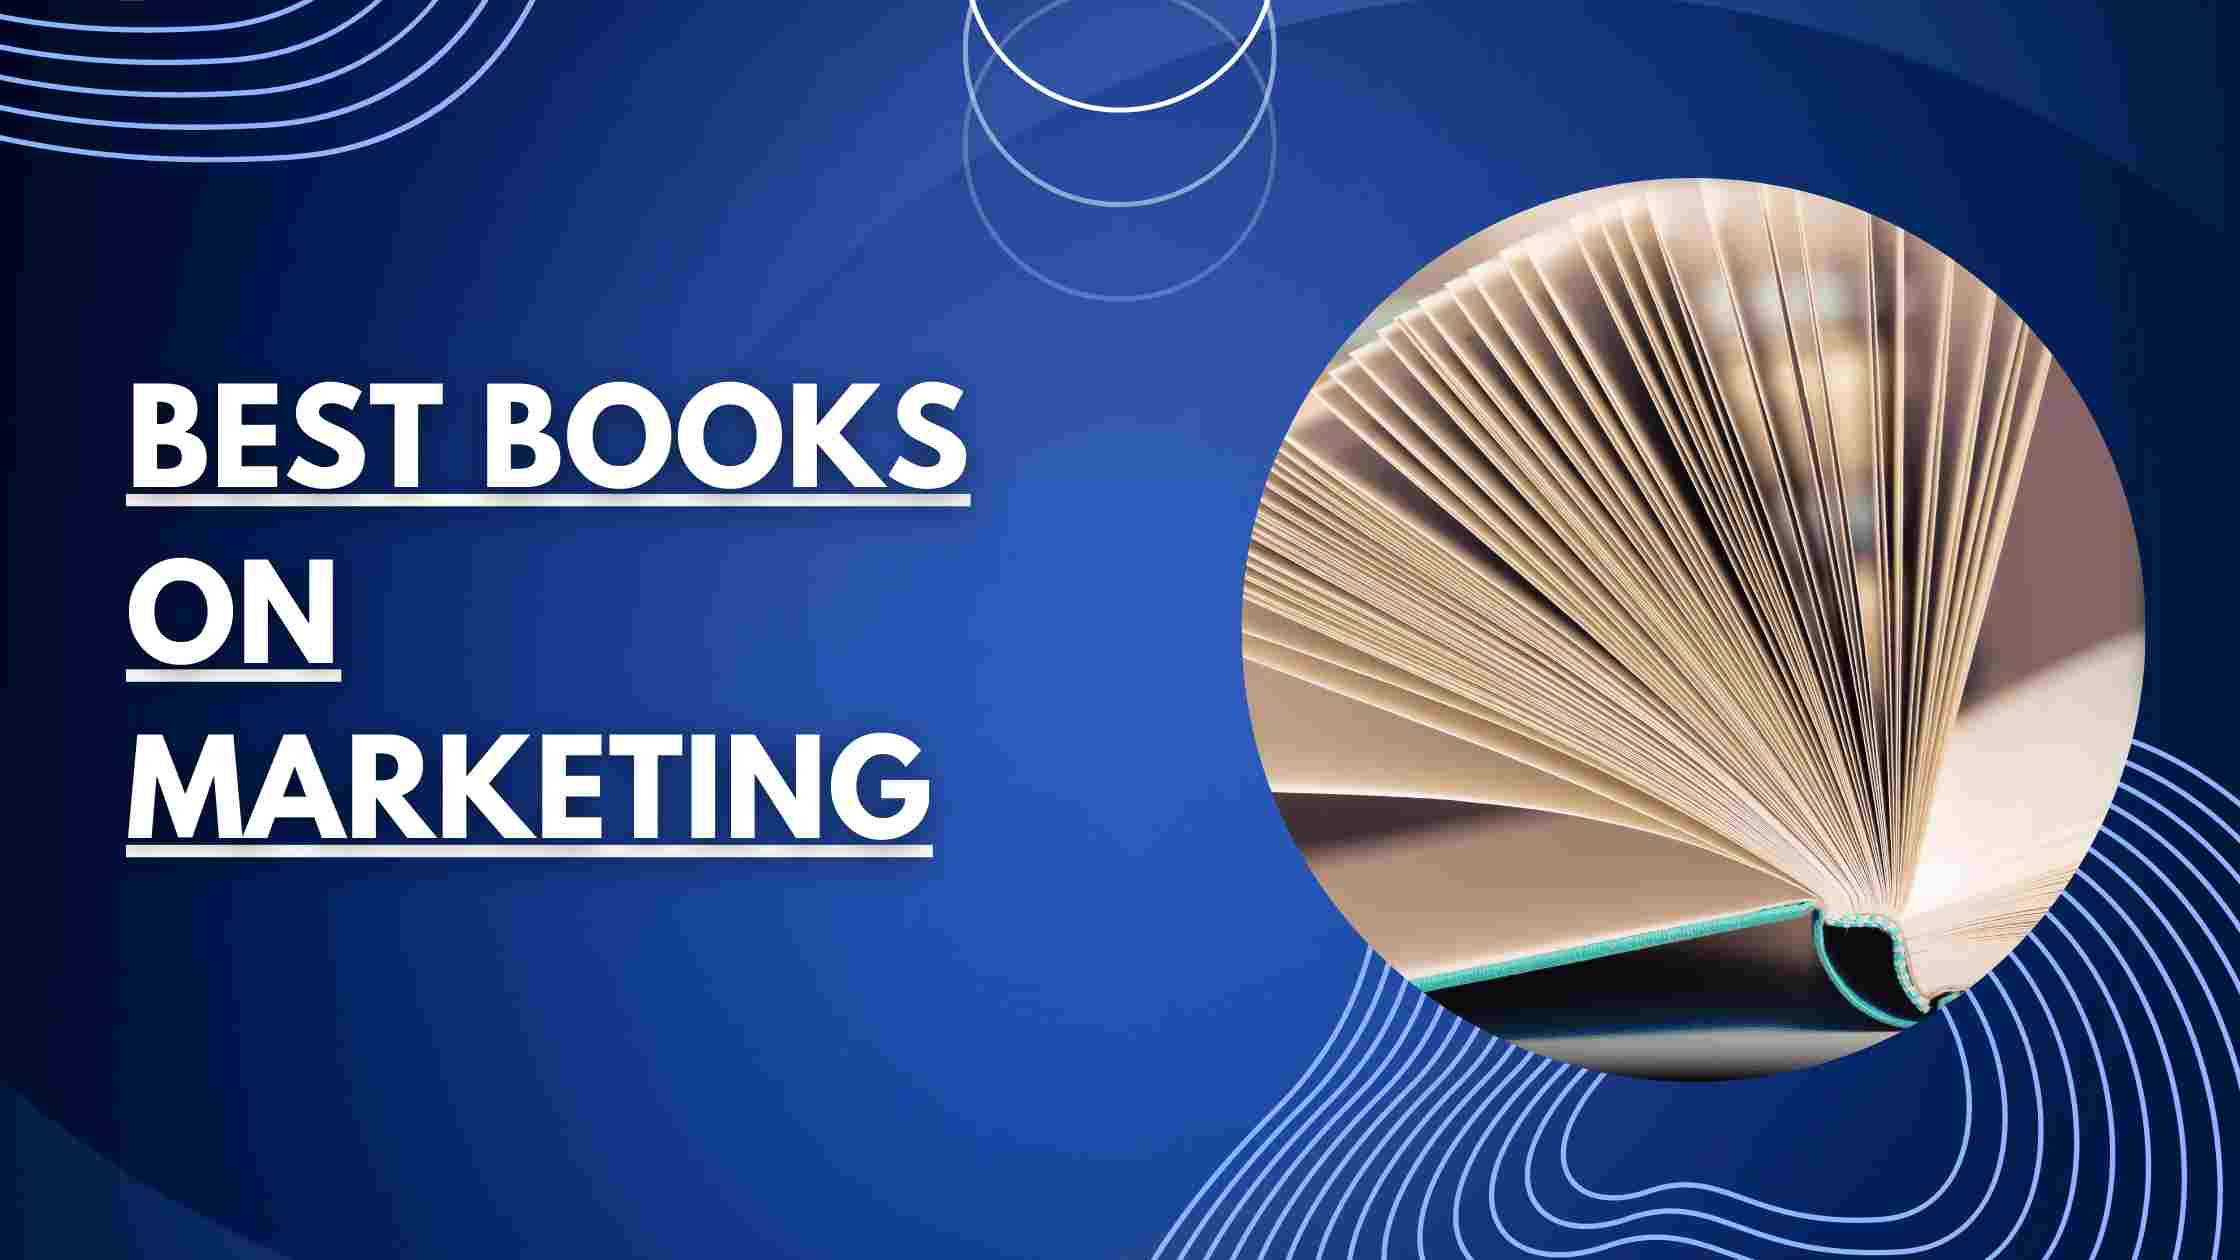 Books on Marketing